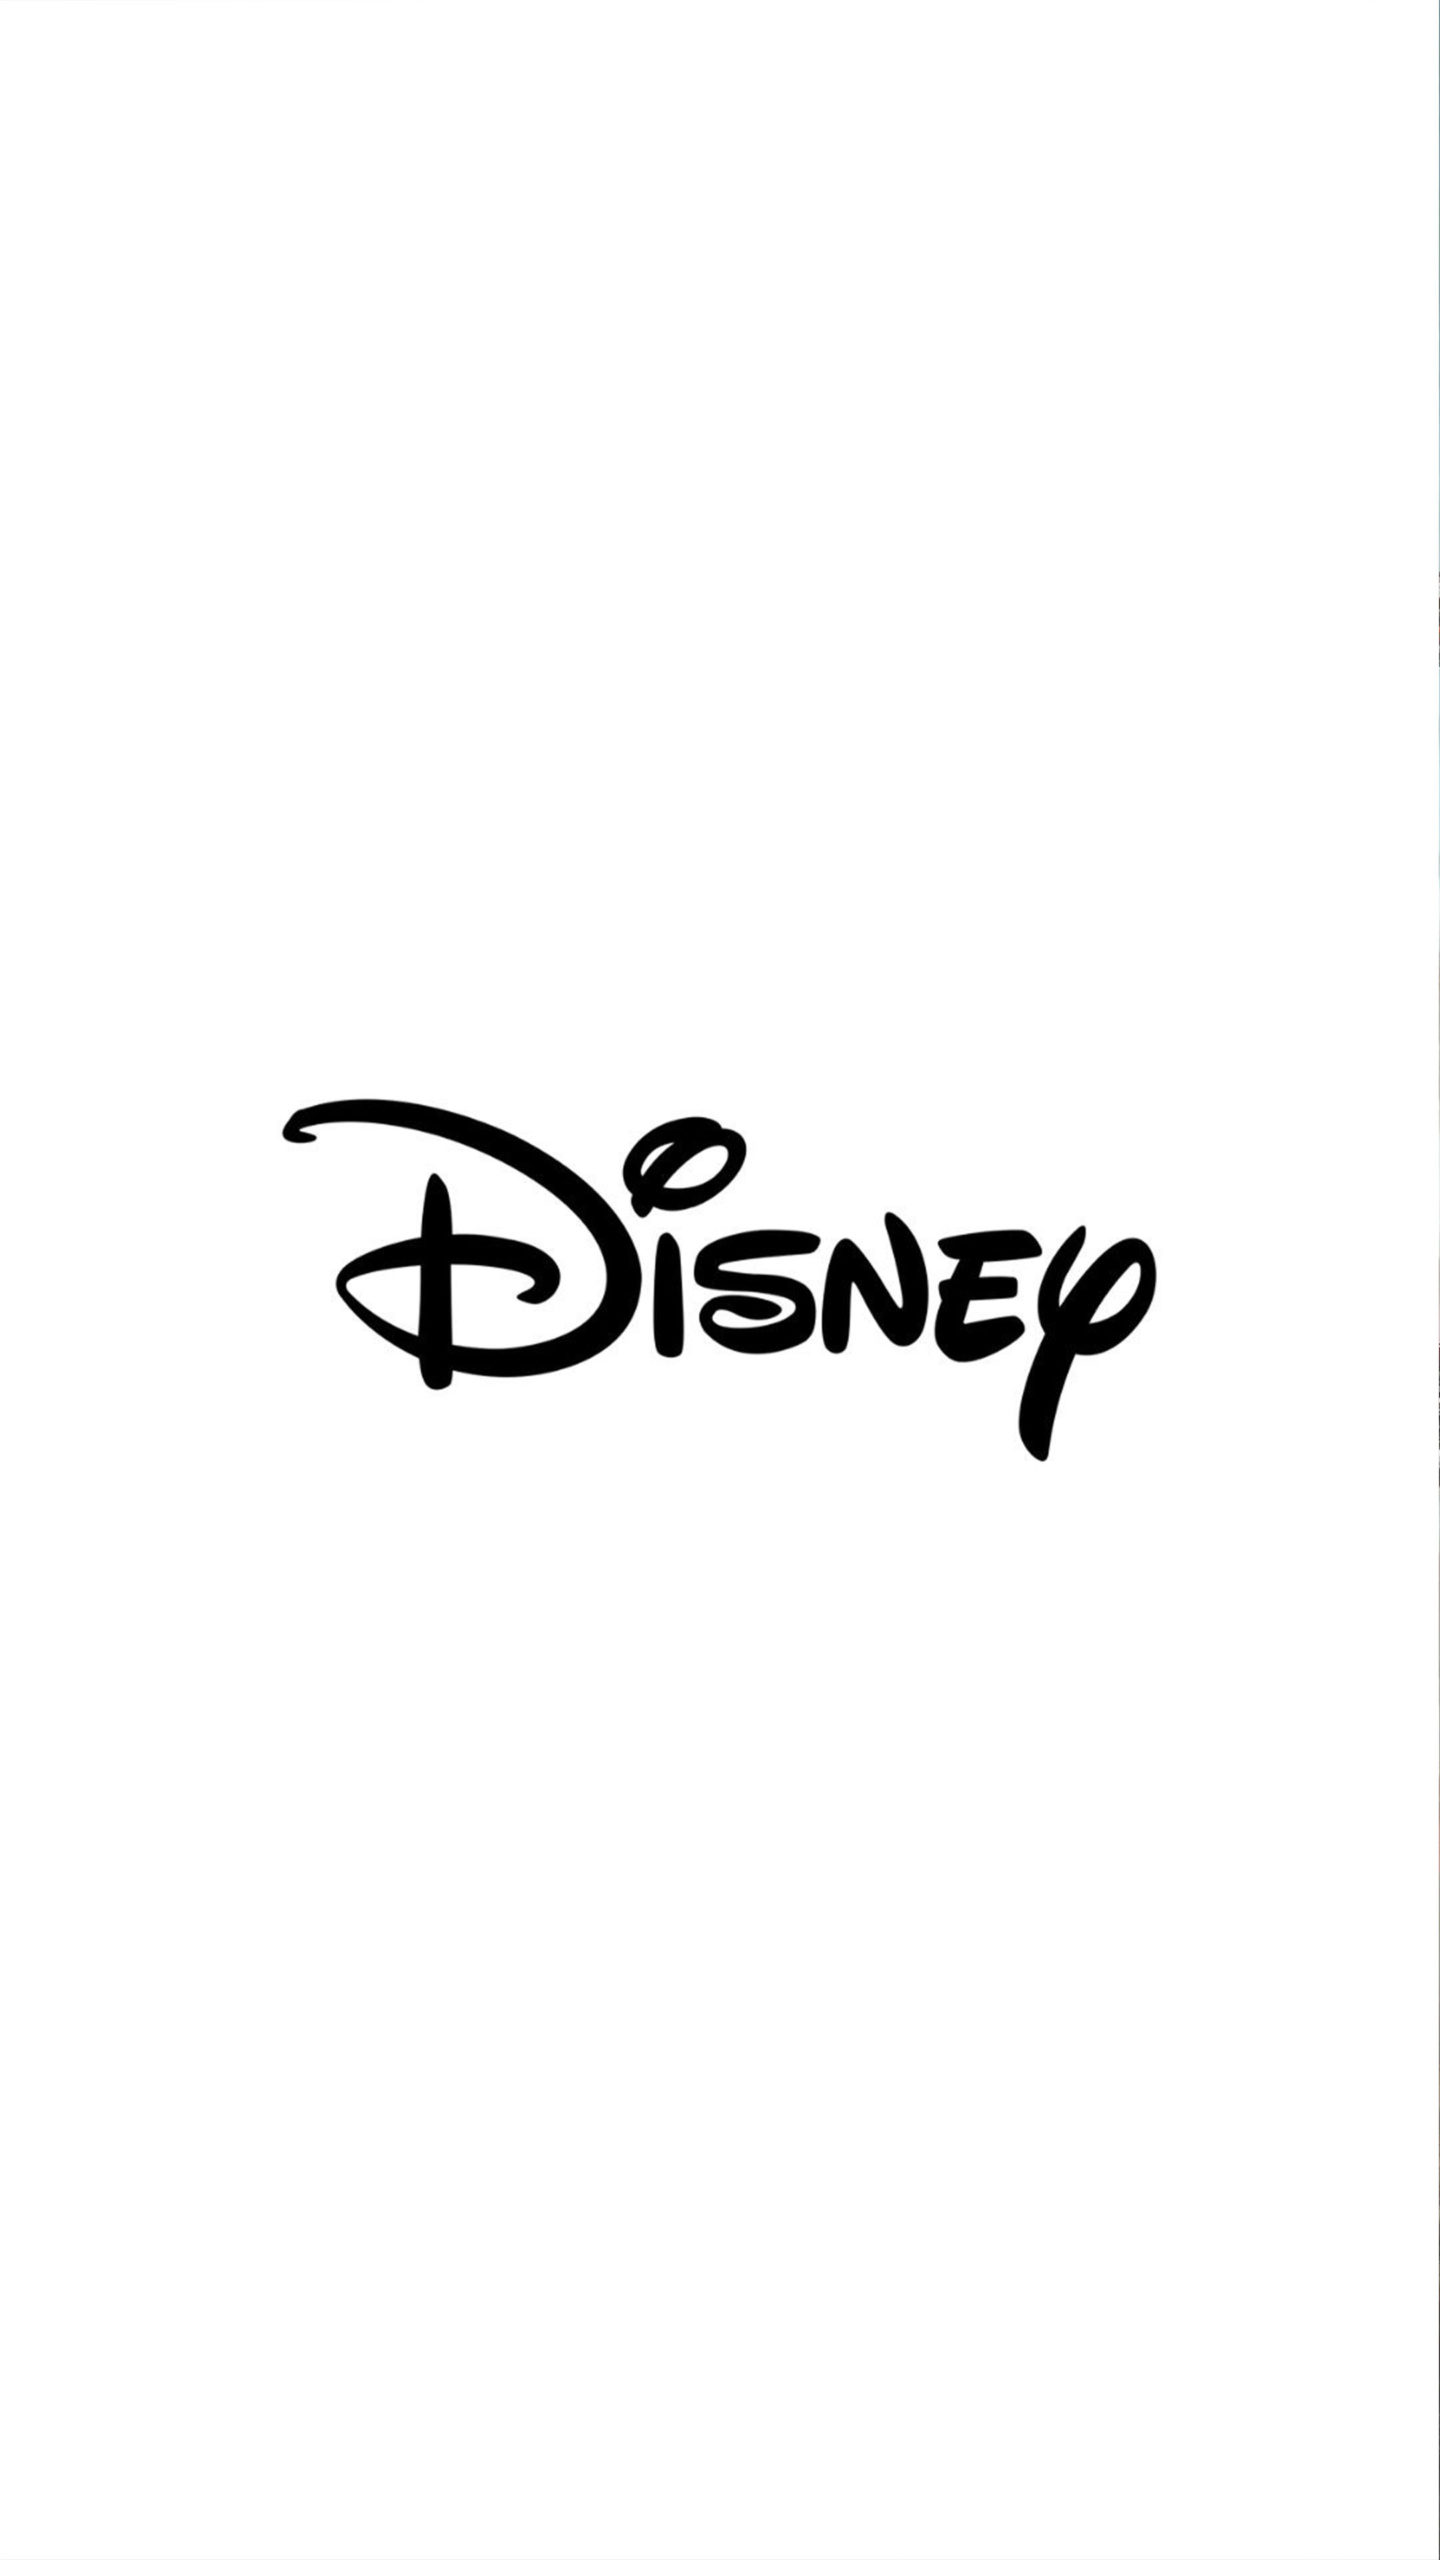 Disney Logo White Background 4K Ultra HD Mobile Wallpaper